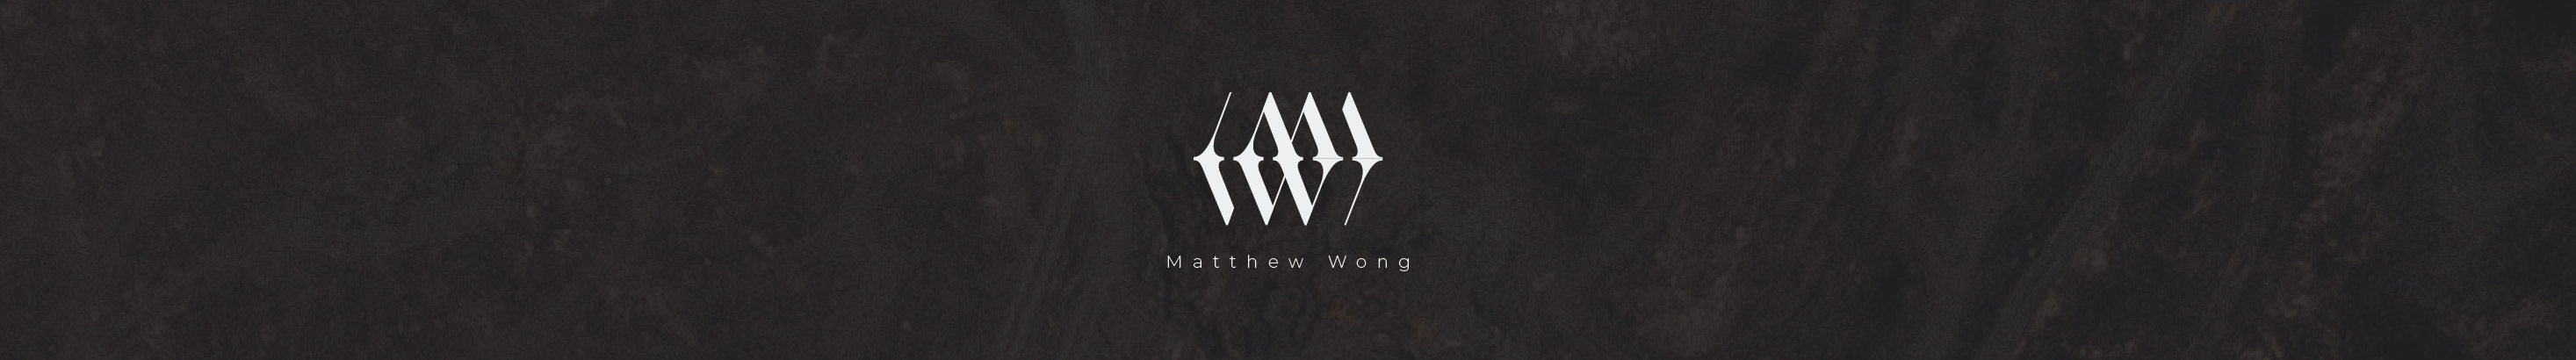 Matthew Wong's profile banner